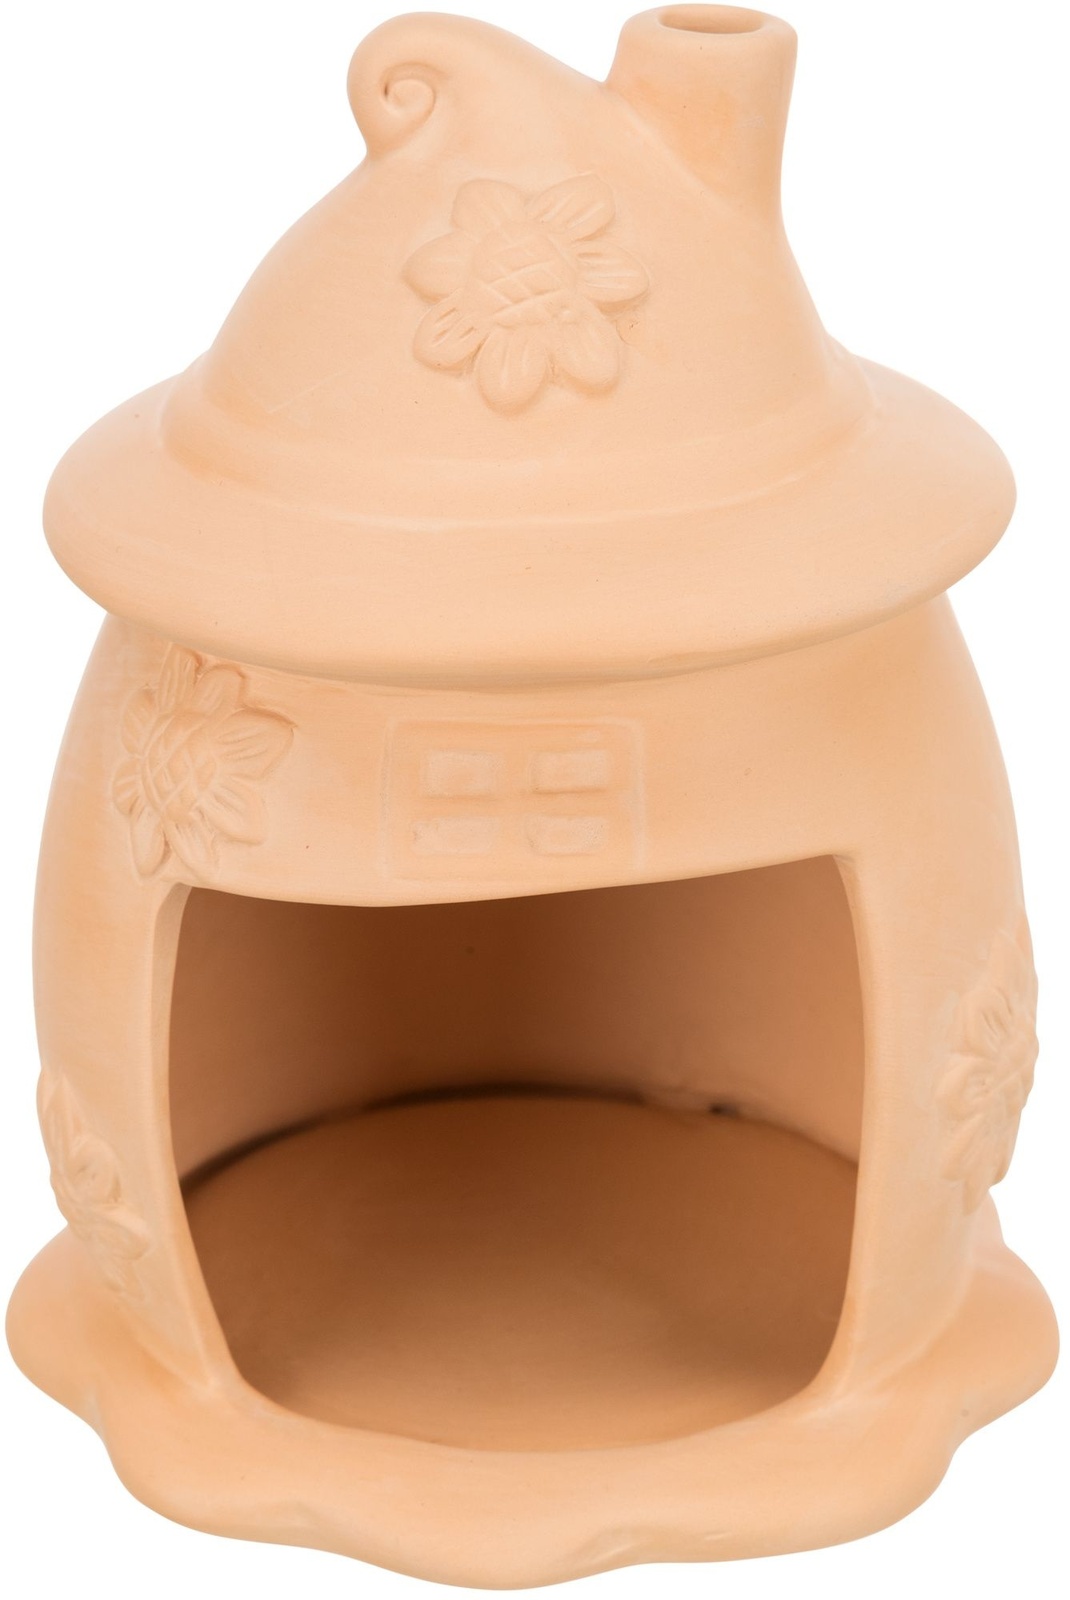 Trixie Trixie домик для мышей, керамика, терракотовый (330 г)